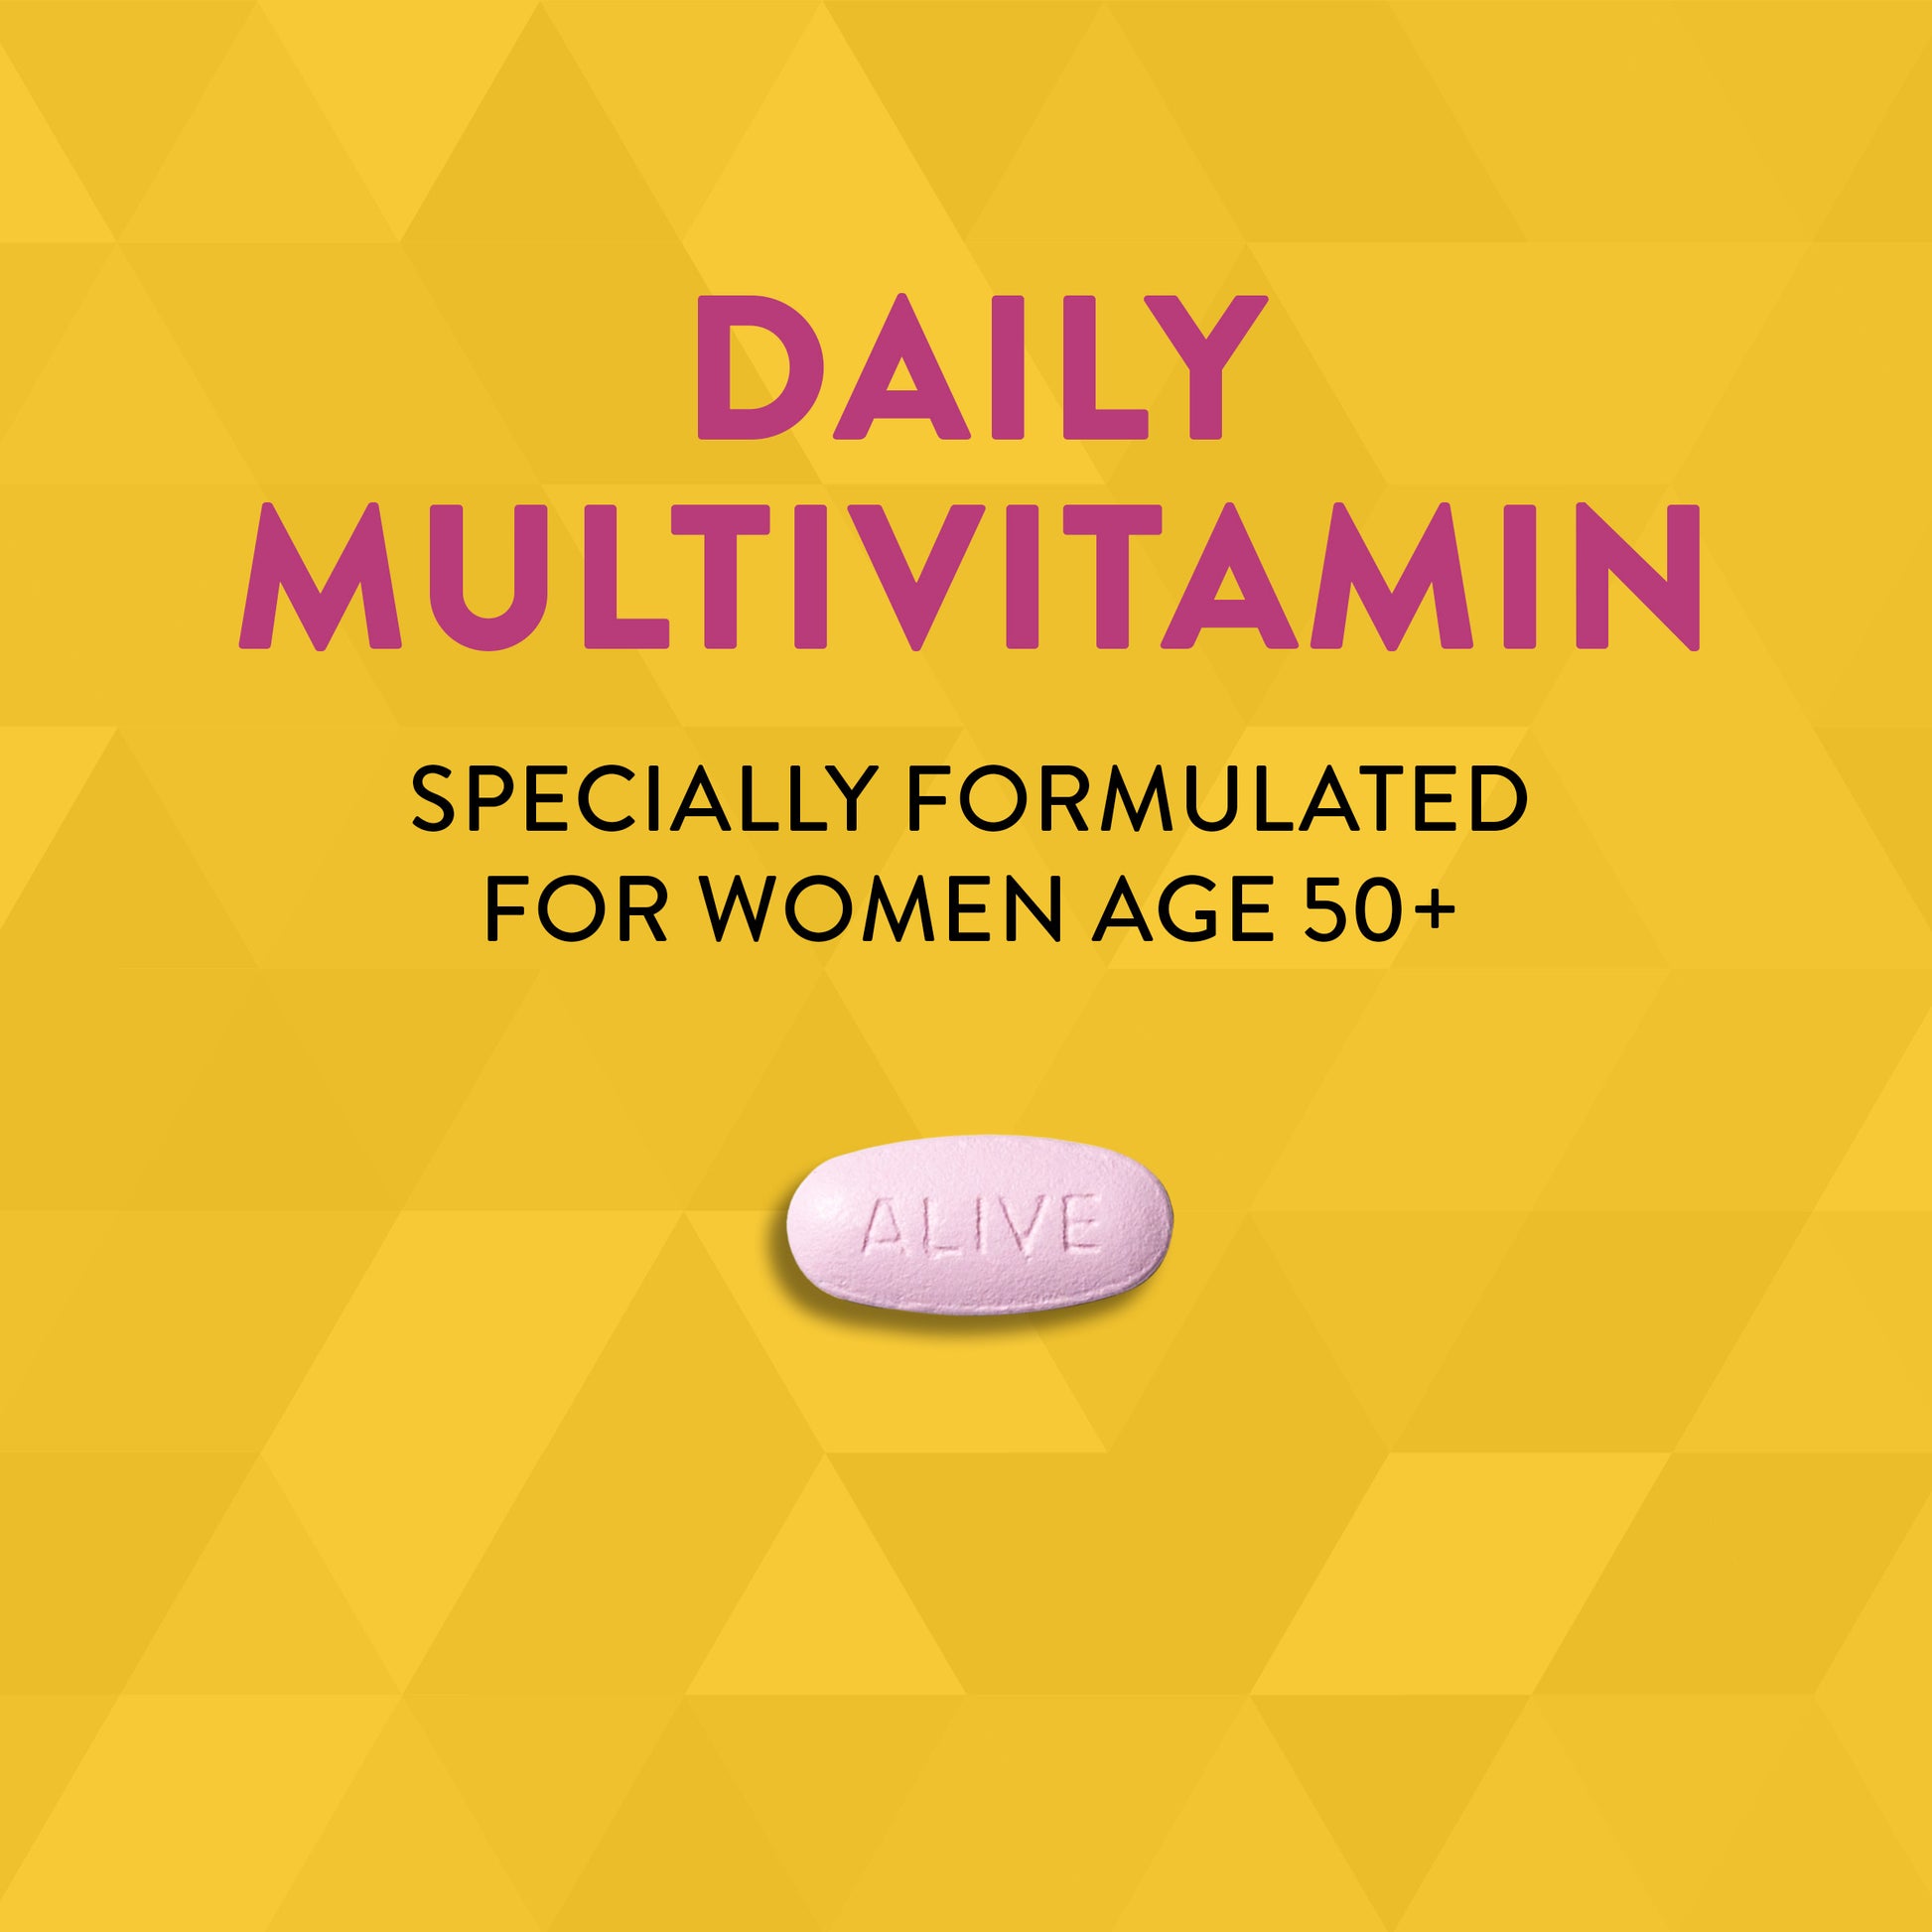 Nature's Way® | Alive!® Women's 50+ Complete Multivitamin